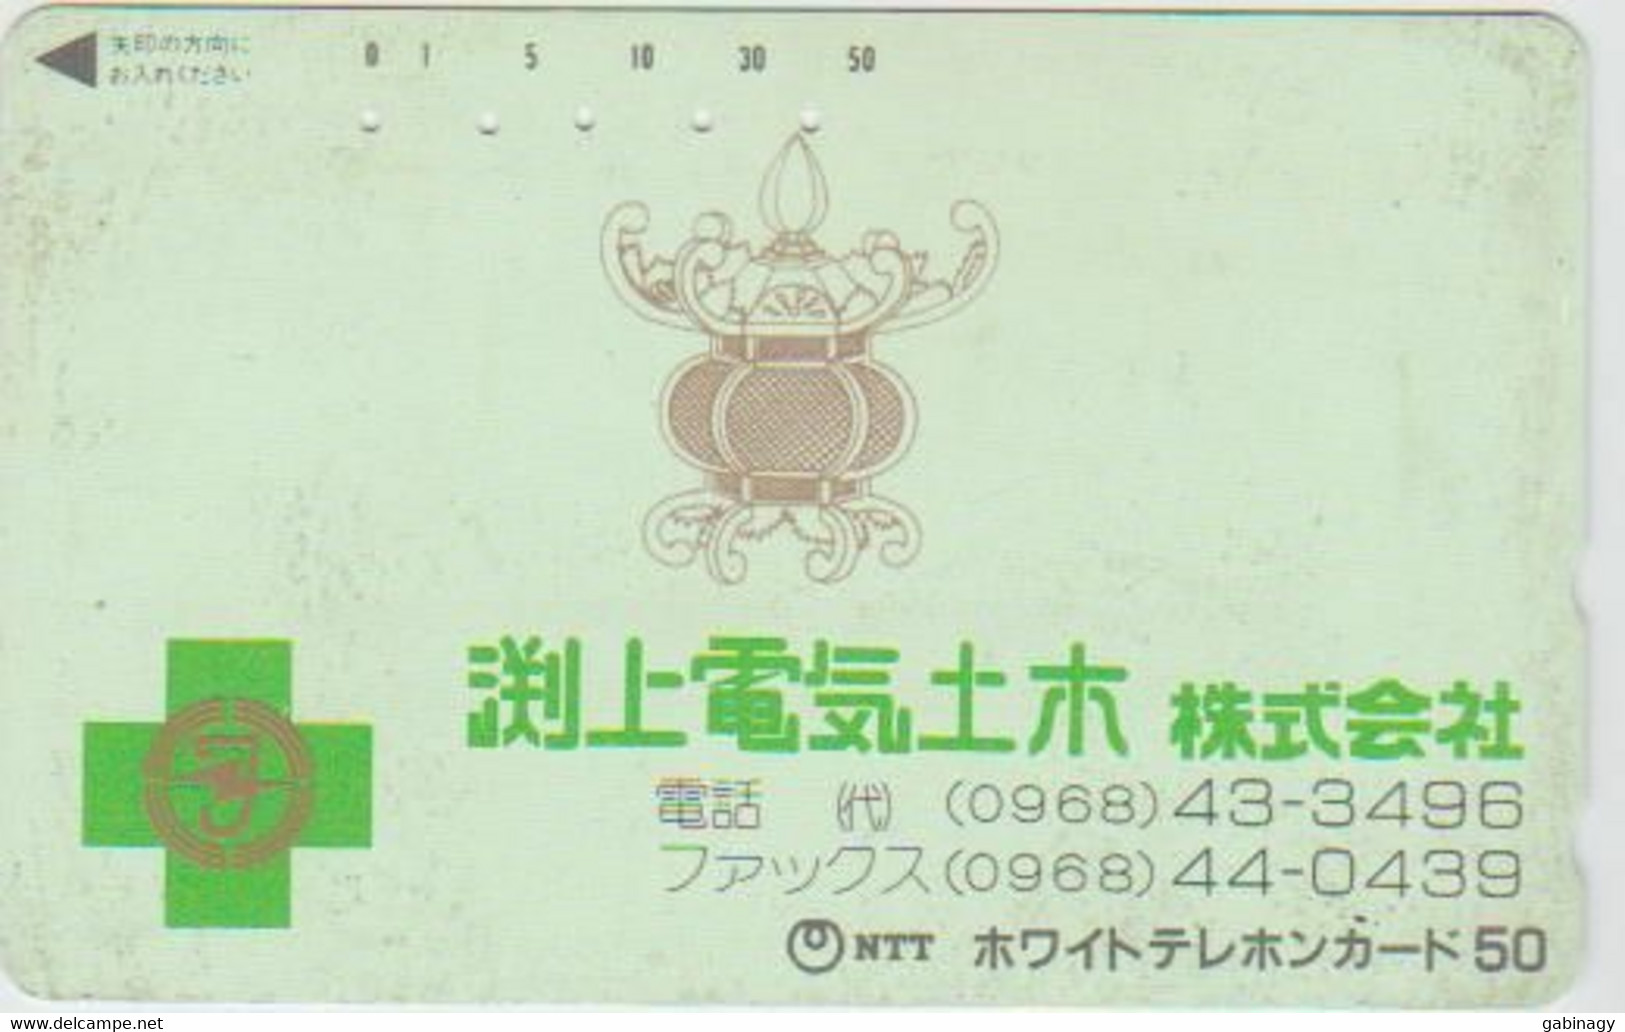 HEALTH - JAPAN-032 - GREEN CROSS - 110-011 - Kultur